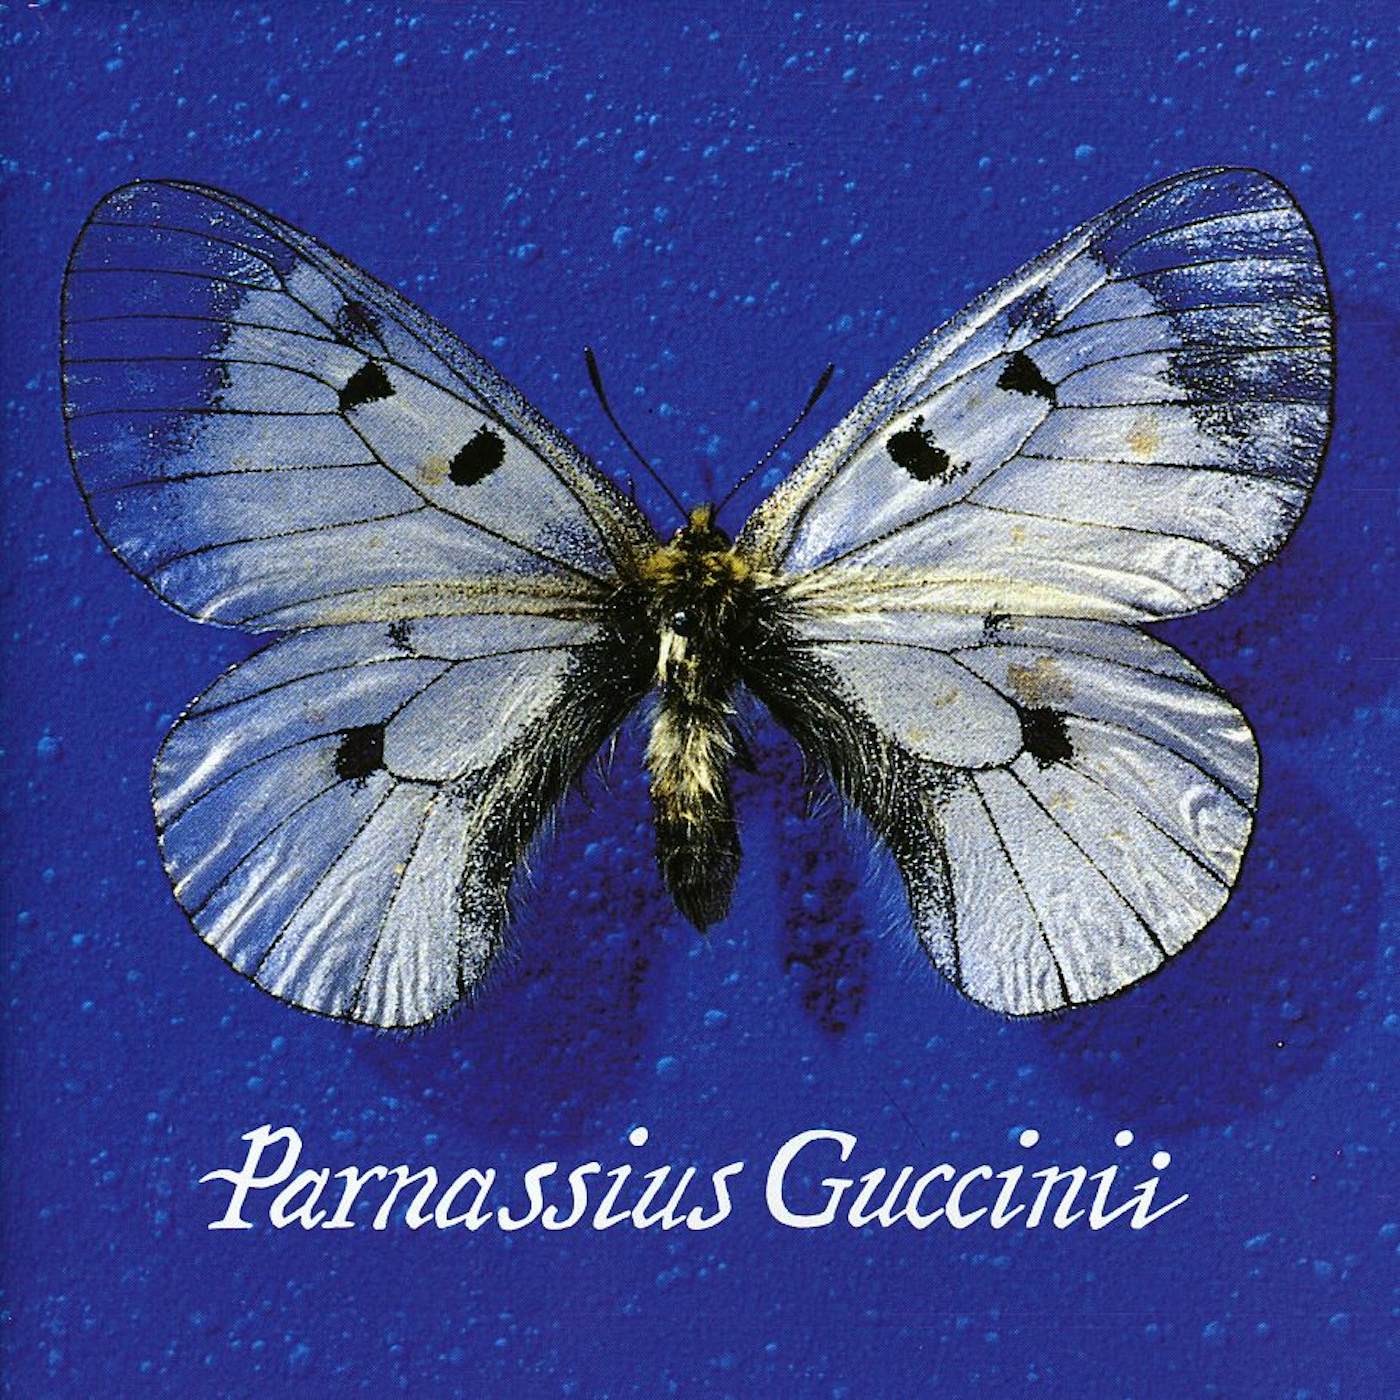 Francesco Guccini PARNASSIUS GUCCINII CD